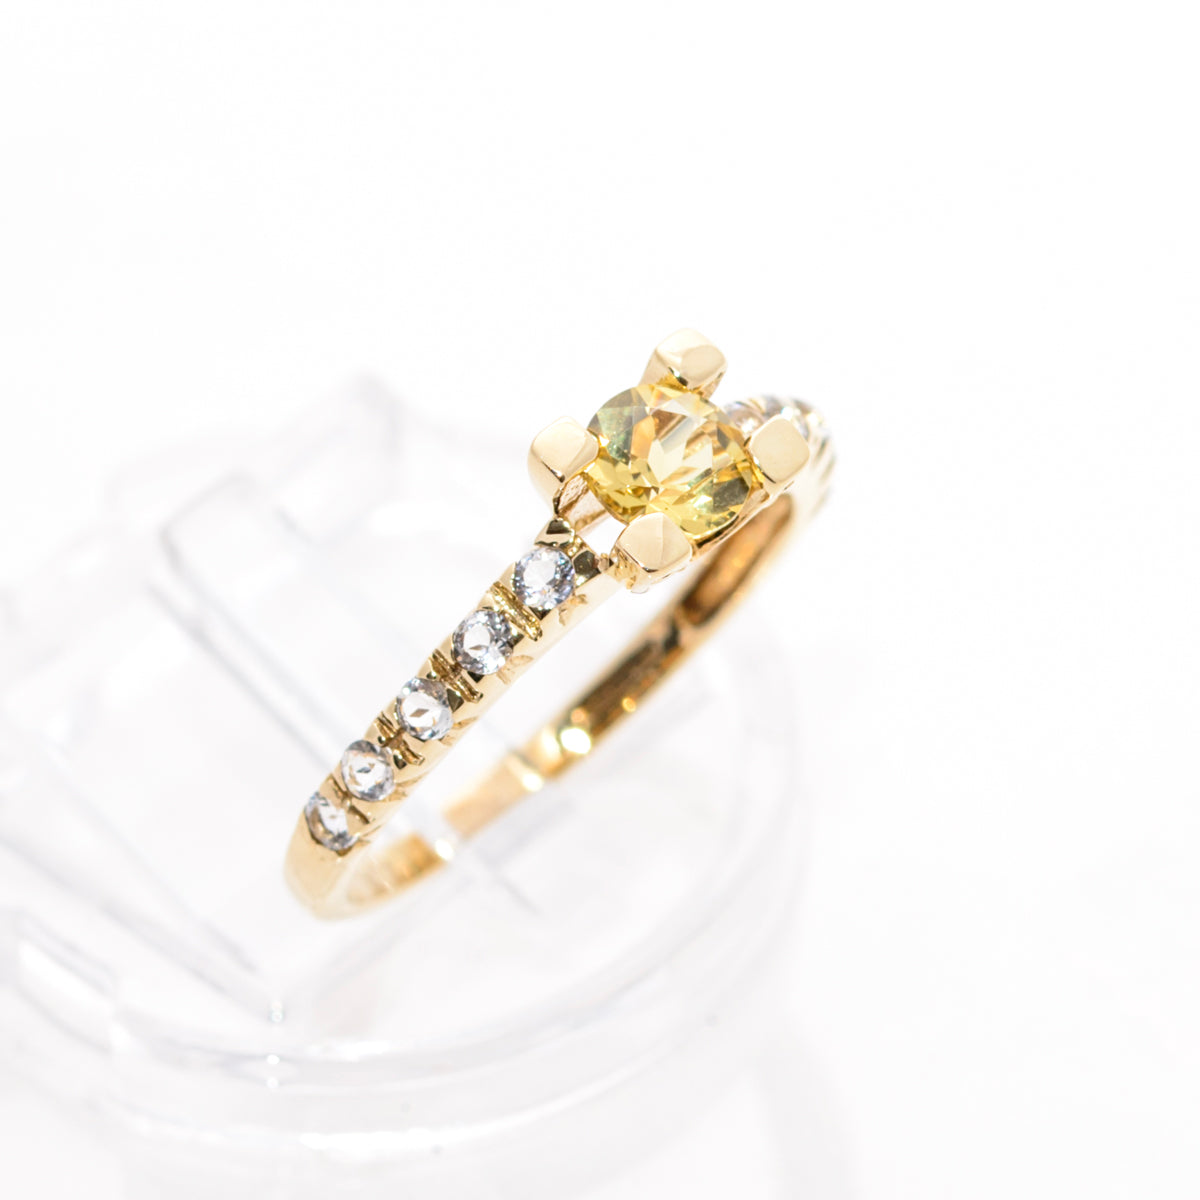 Golden Heliodor Gemstone Ring In 9ct Gold With White Topaz Shoulder Decoration (A1445)